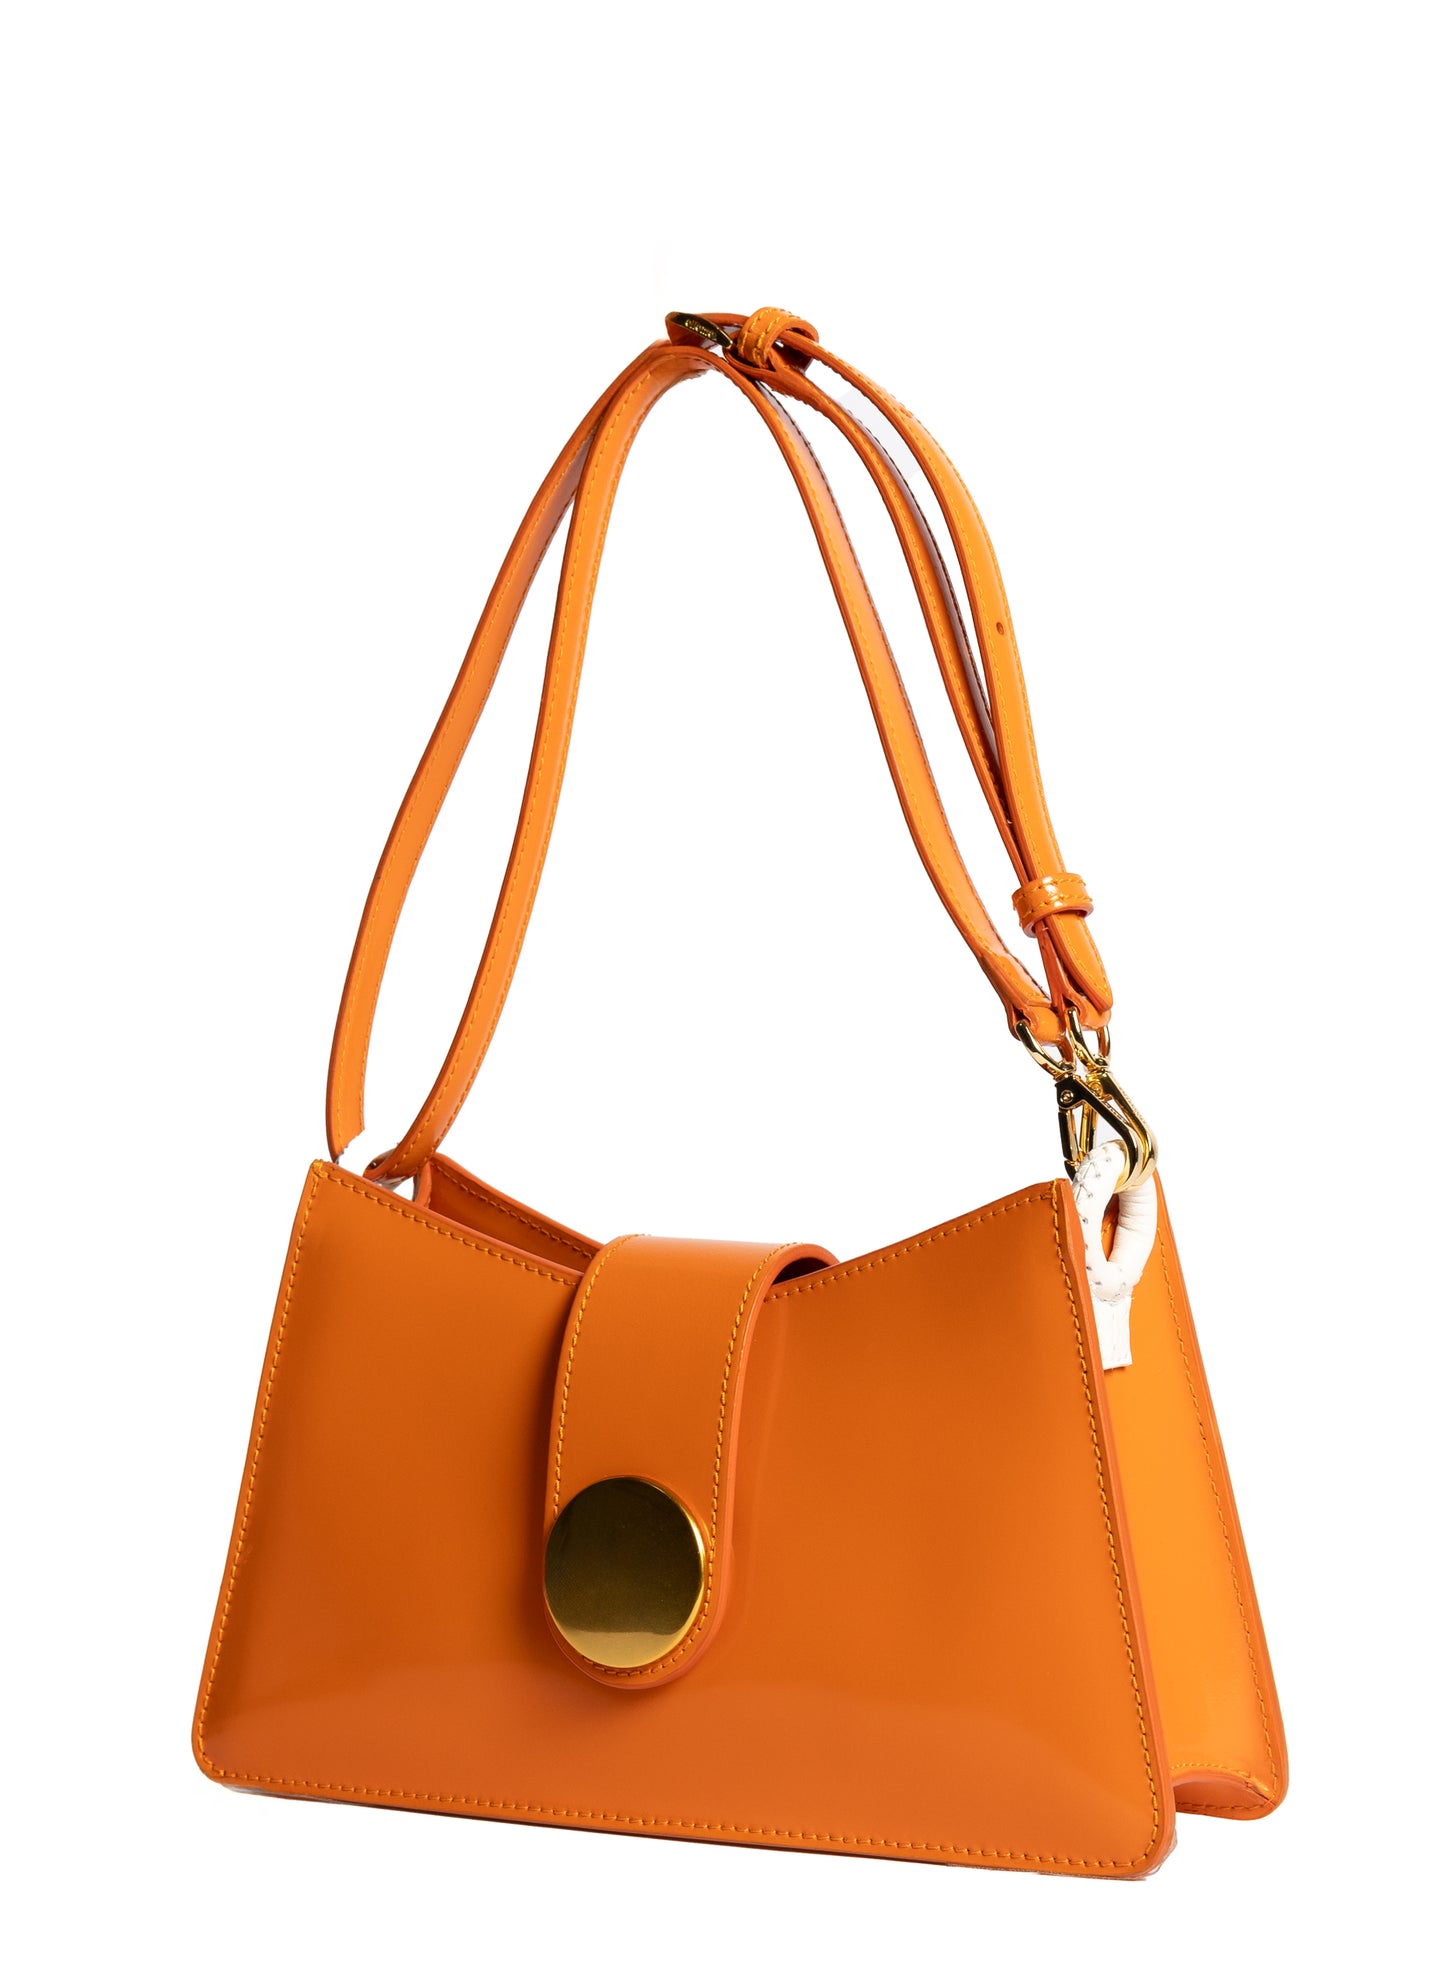 Buckle Shoulder Bag Mirror Orange/White